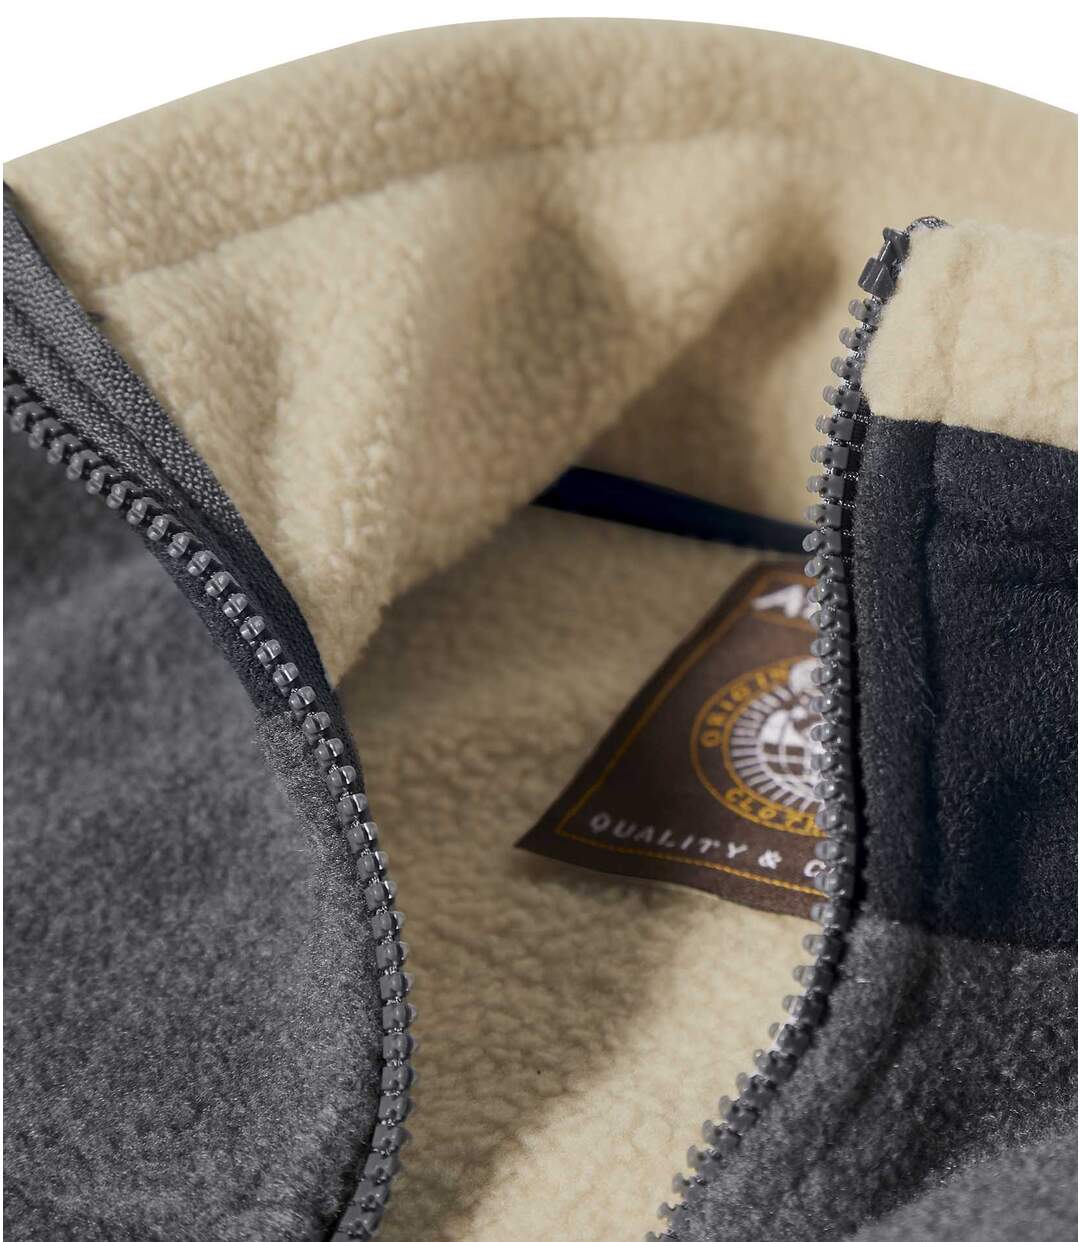 Men's Gray Sherpa-Lined Fleece Jacket - Full Zip Atlas For Men